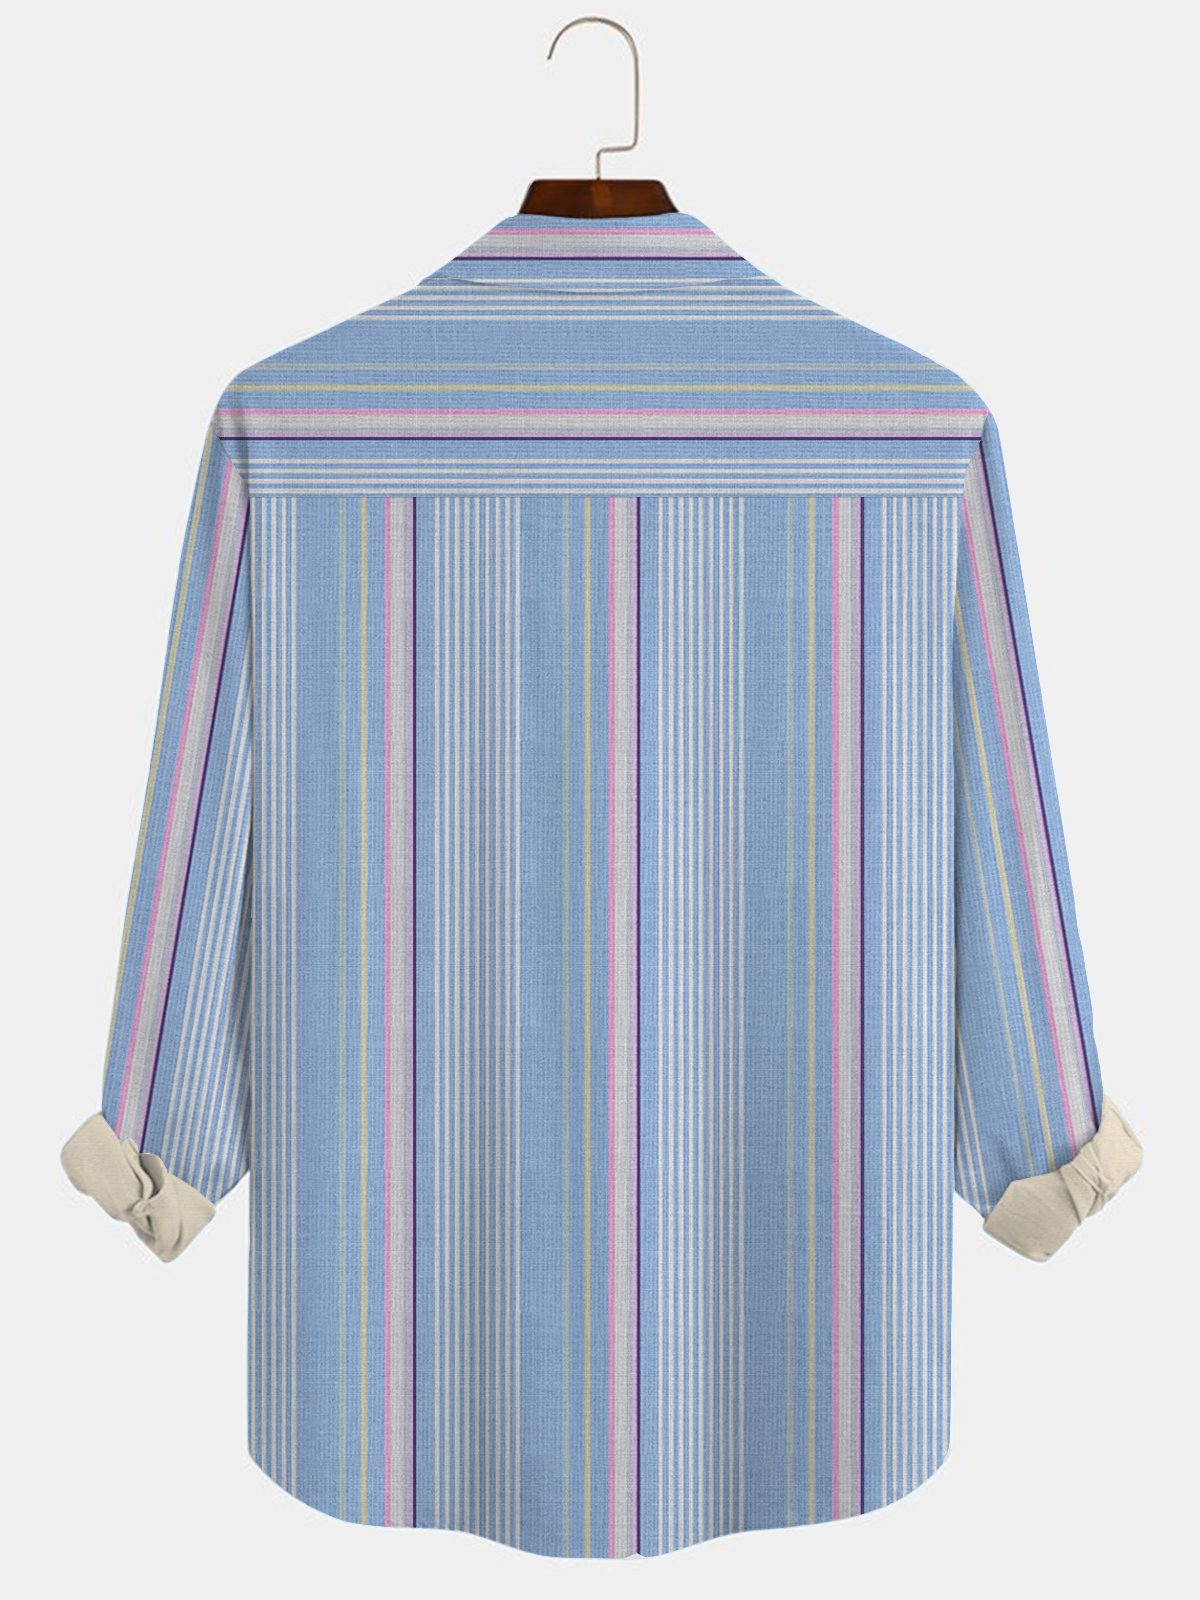 JoyMitty Beach Vacation Stripe Light Blue Men's Casual Long Sleeve Shirts Stretch Plus Size Aloha Camp Pocket Shirts